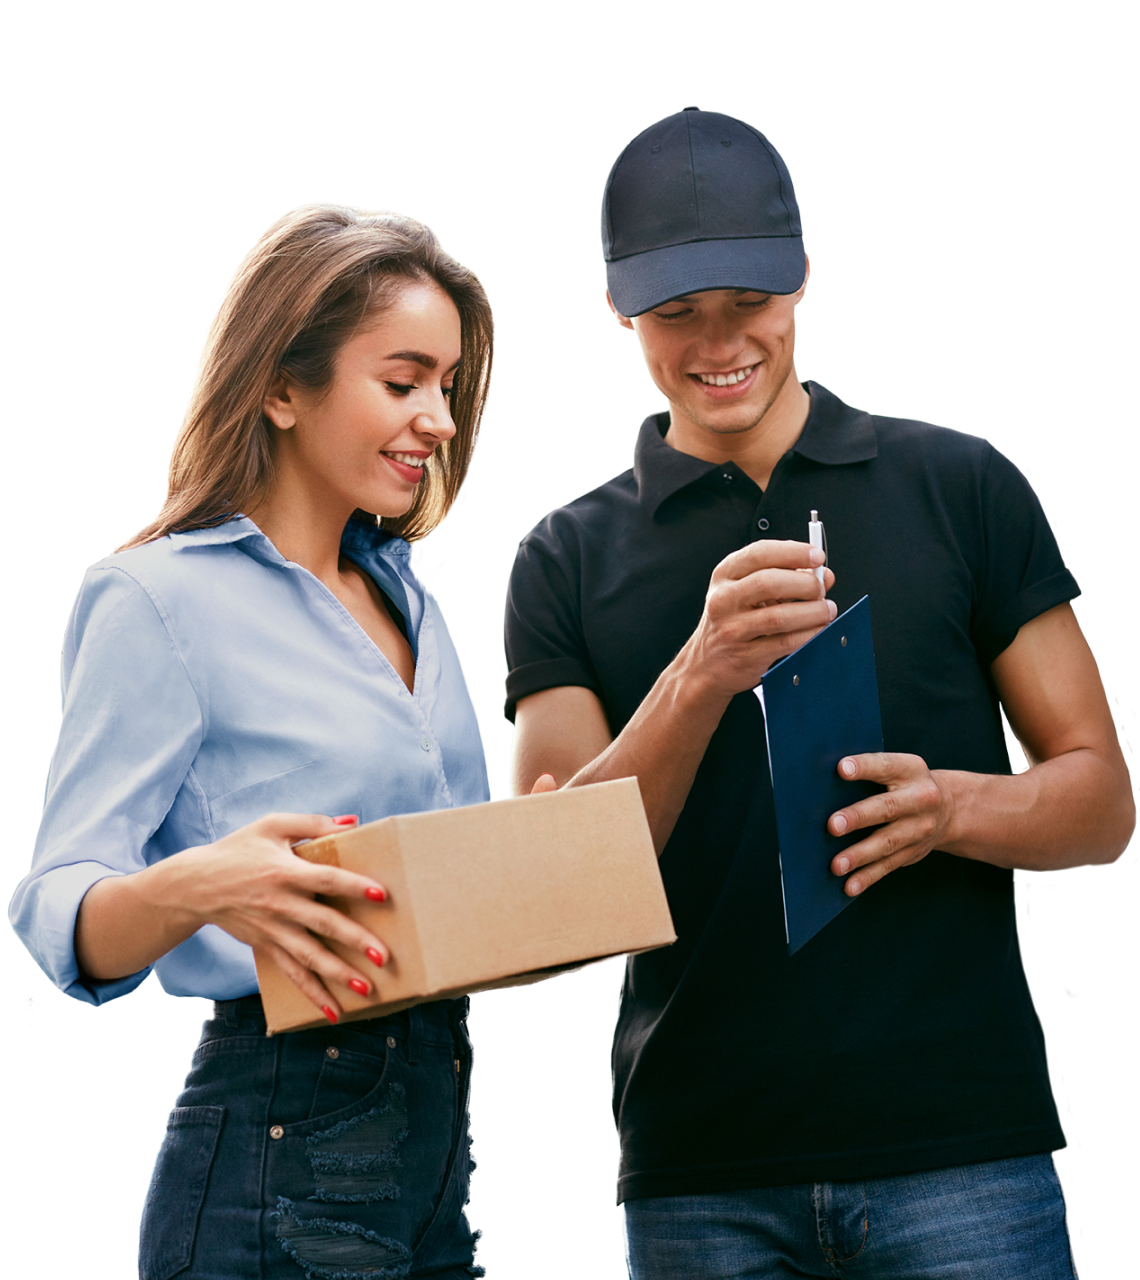 The fastest courier service - girl and guy-courier - borzo delivery / Entrega en el mismo día - guy hands over the parcel - borzo delivery / Layanan kurir tercepat-cewek dan cowok-kurir-pengiriman borzo